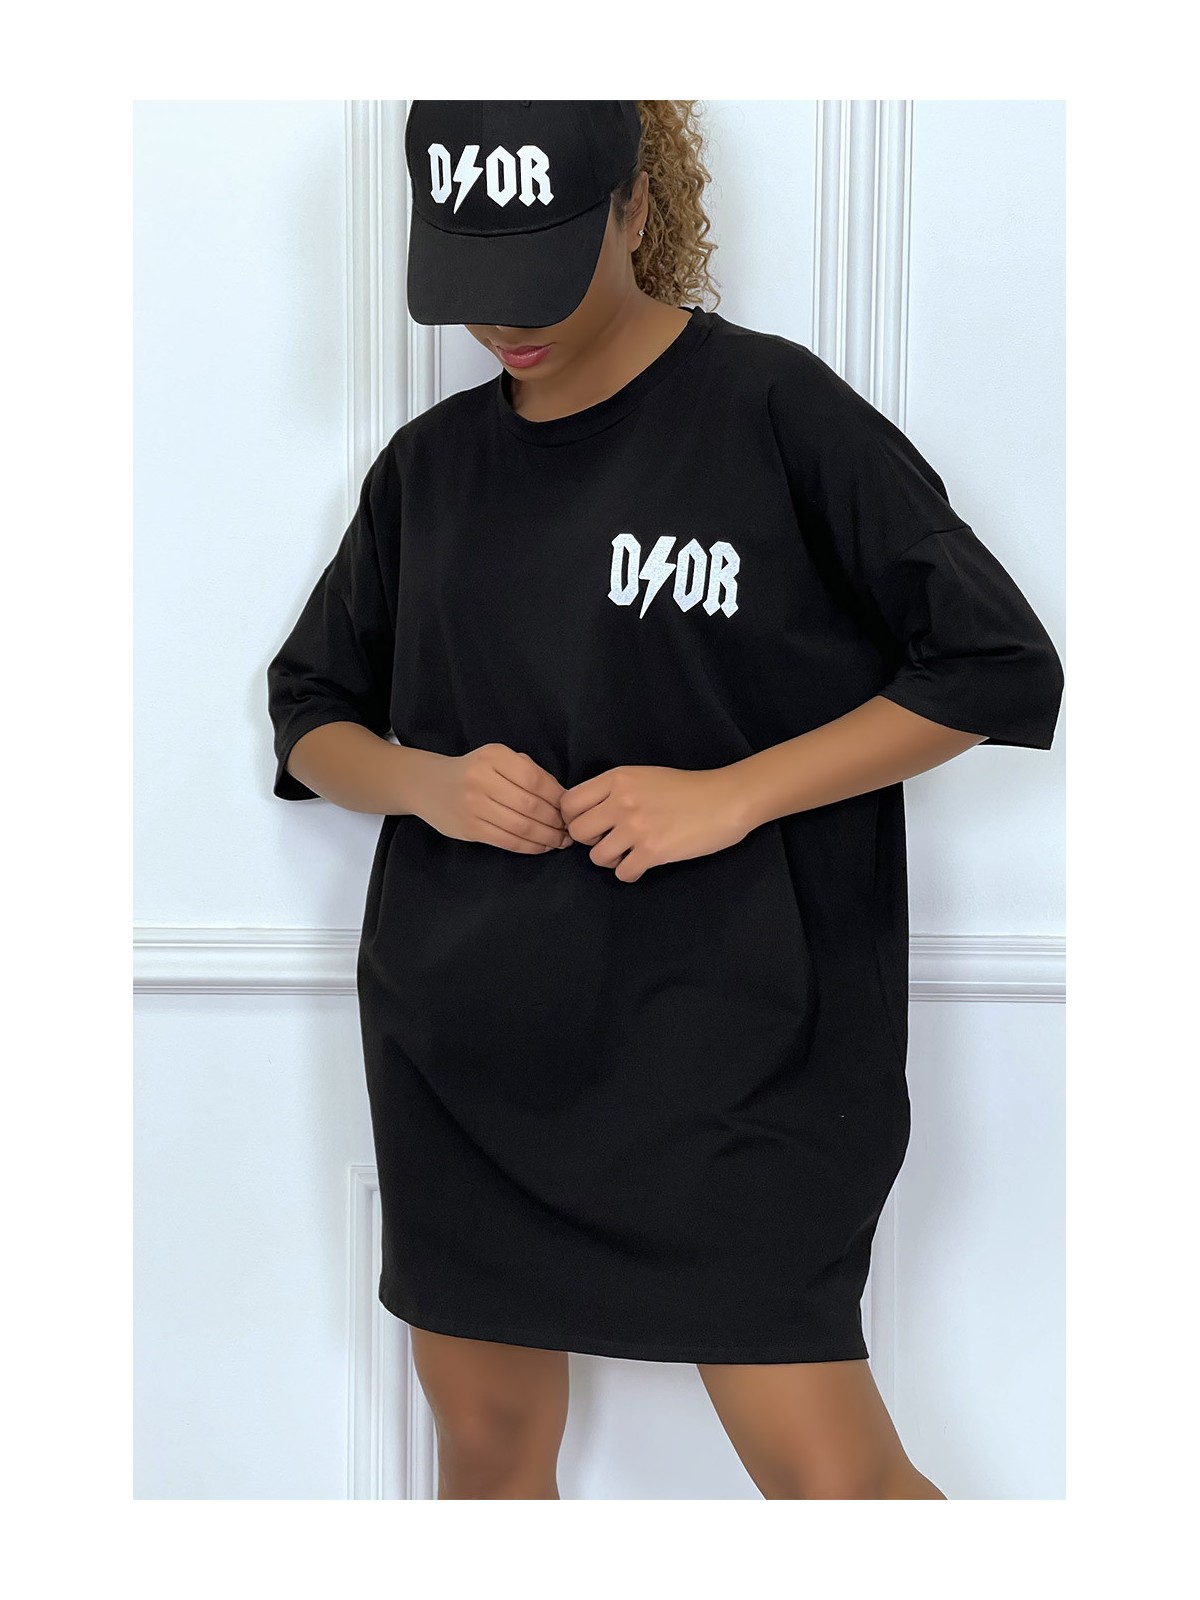 Tee-shirt oversize noir tendance, écriture "D/or", manche mi-longue - 5